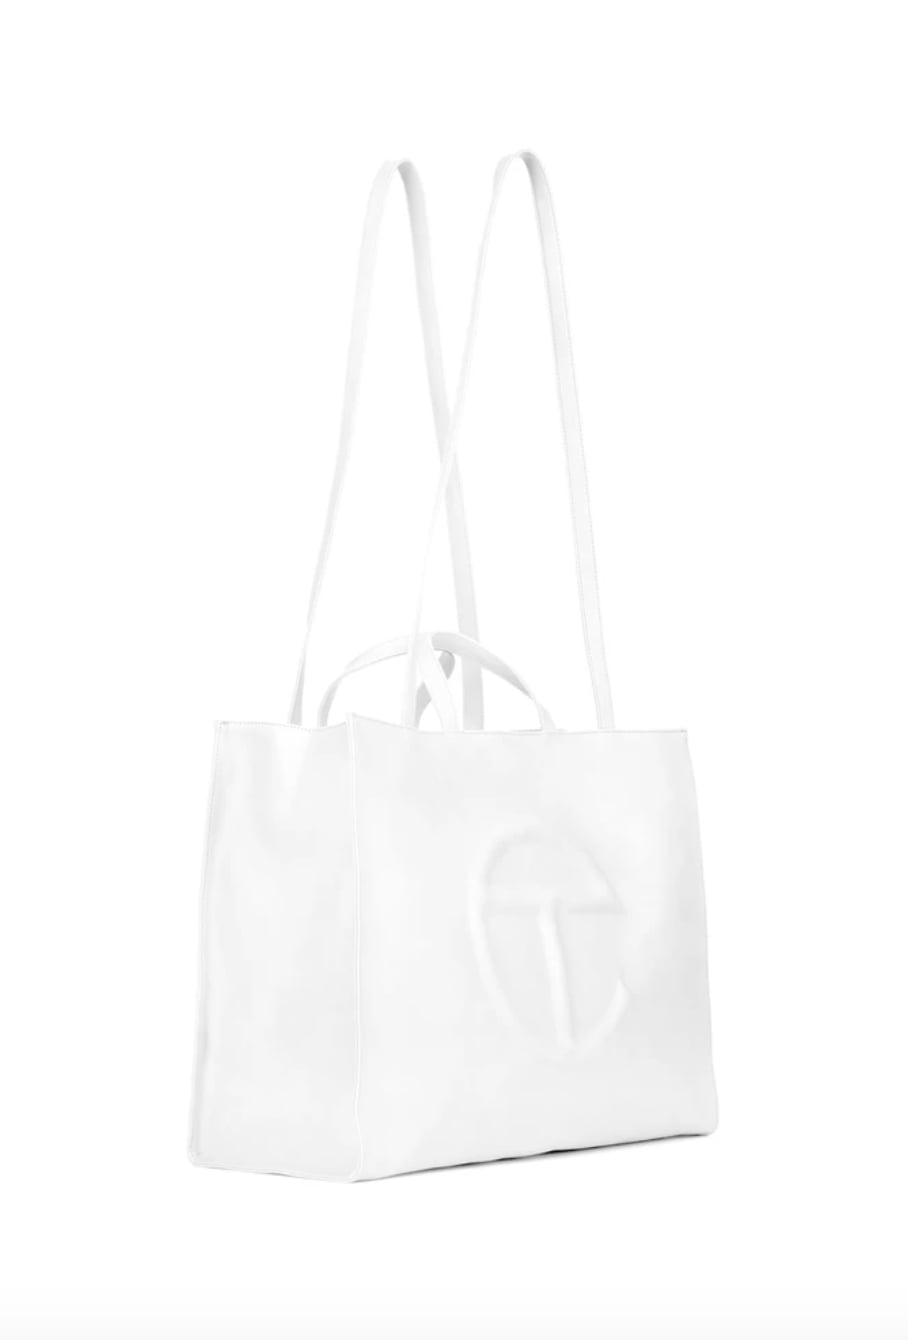 Incarijk weg te verspillen Hong Kong Beyonce Spotted With a White Telfar Bag | POPSUGAR Fashion